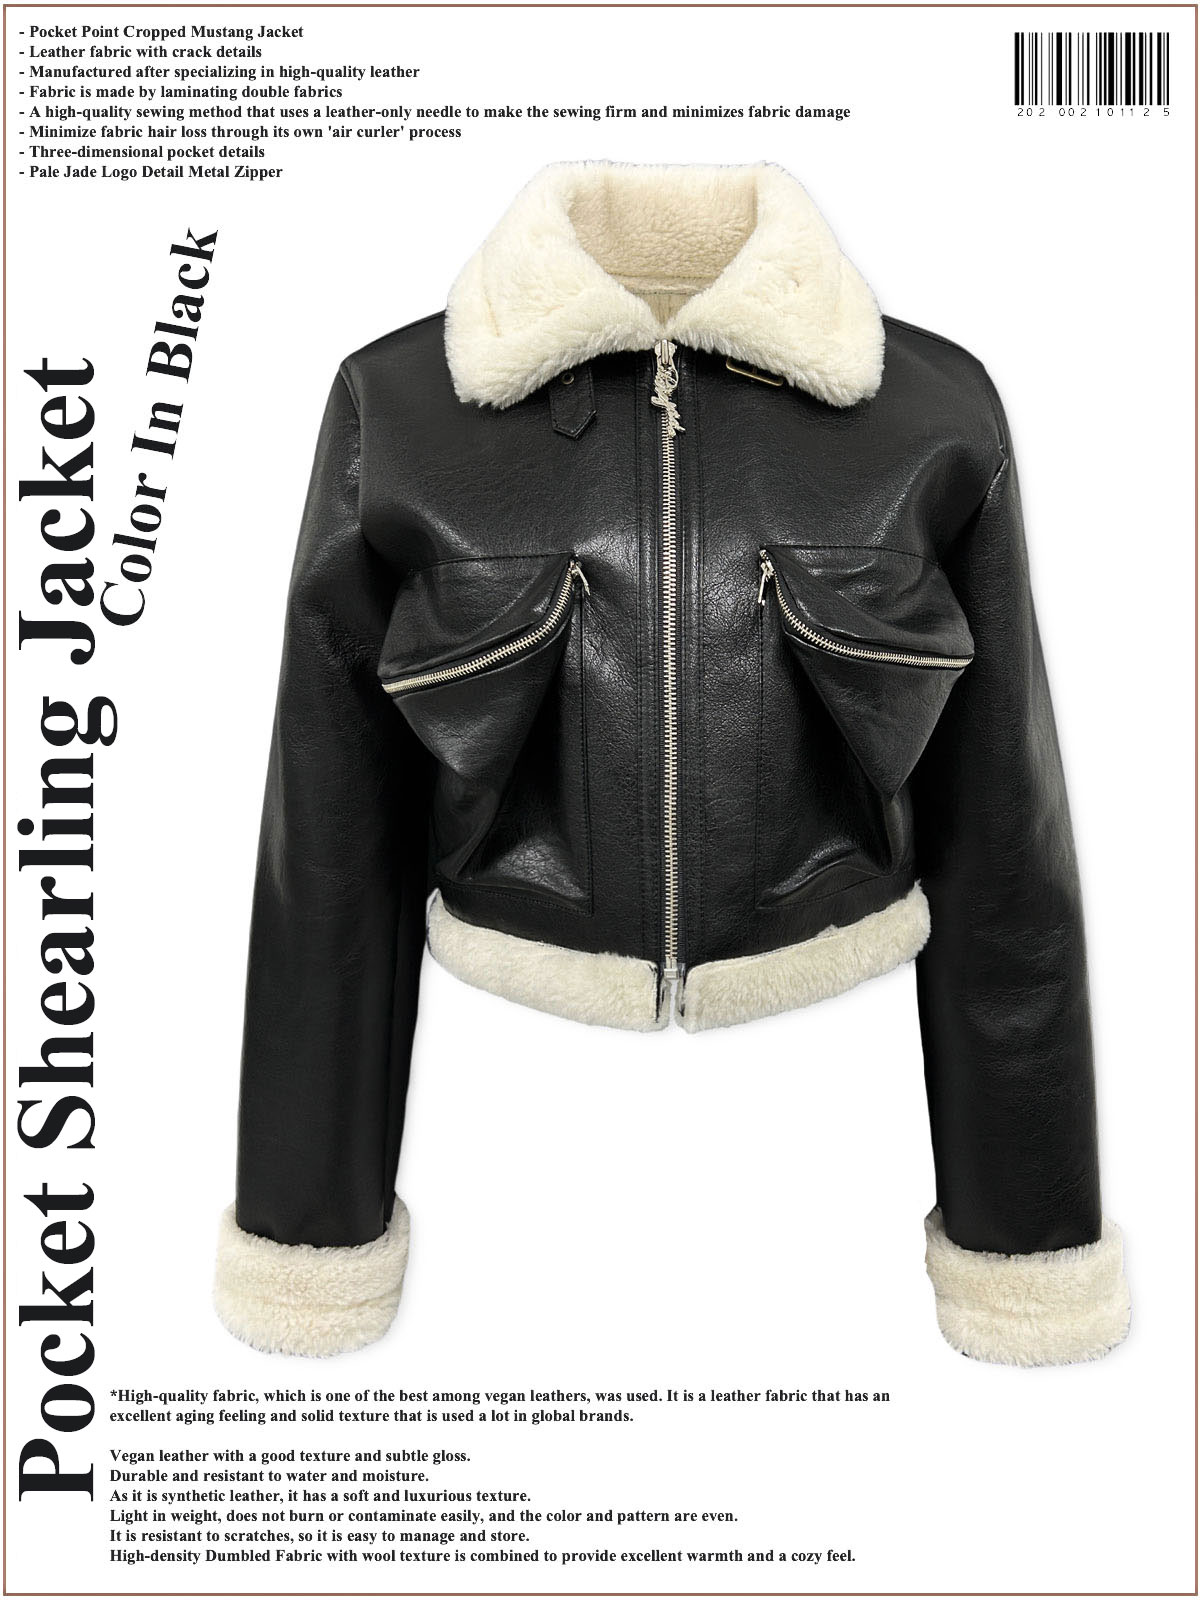 Pocket Shearling Jacket in Black